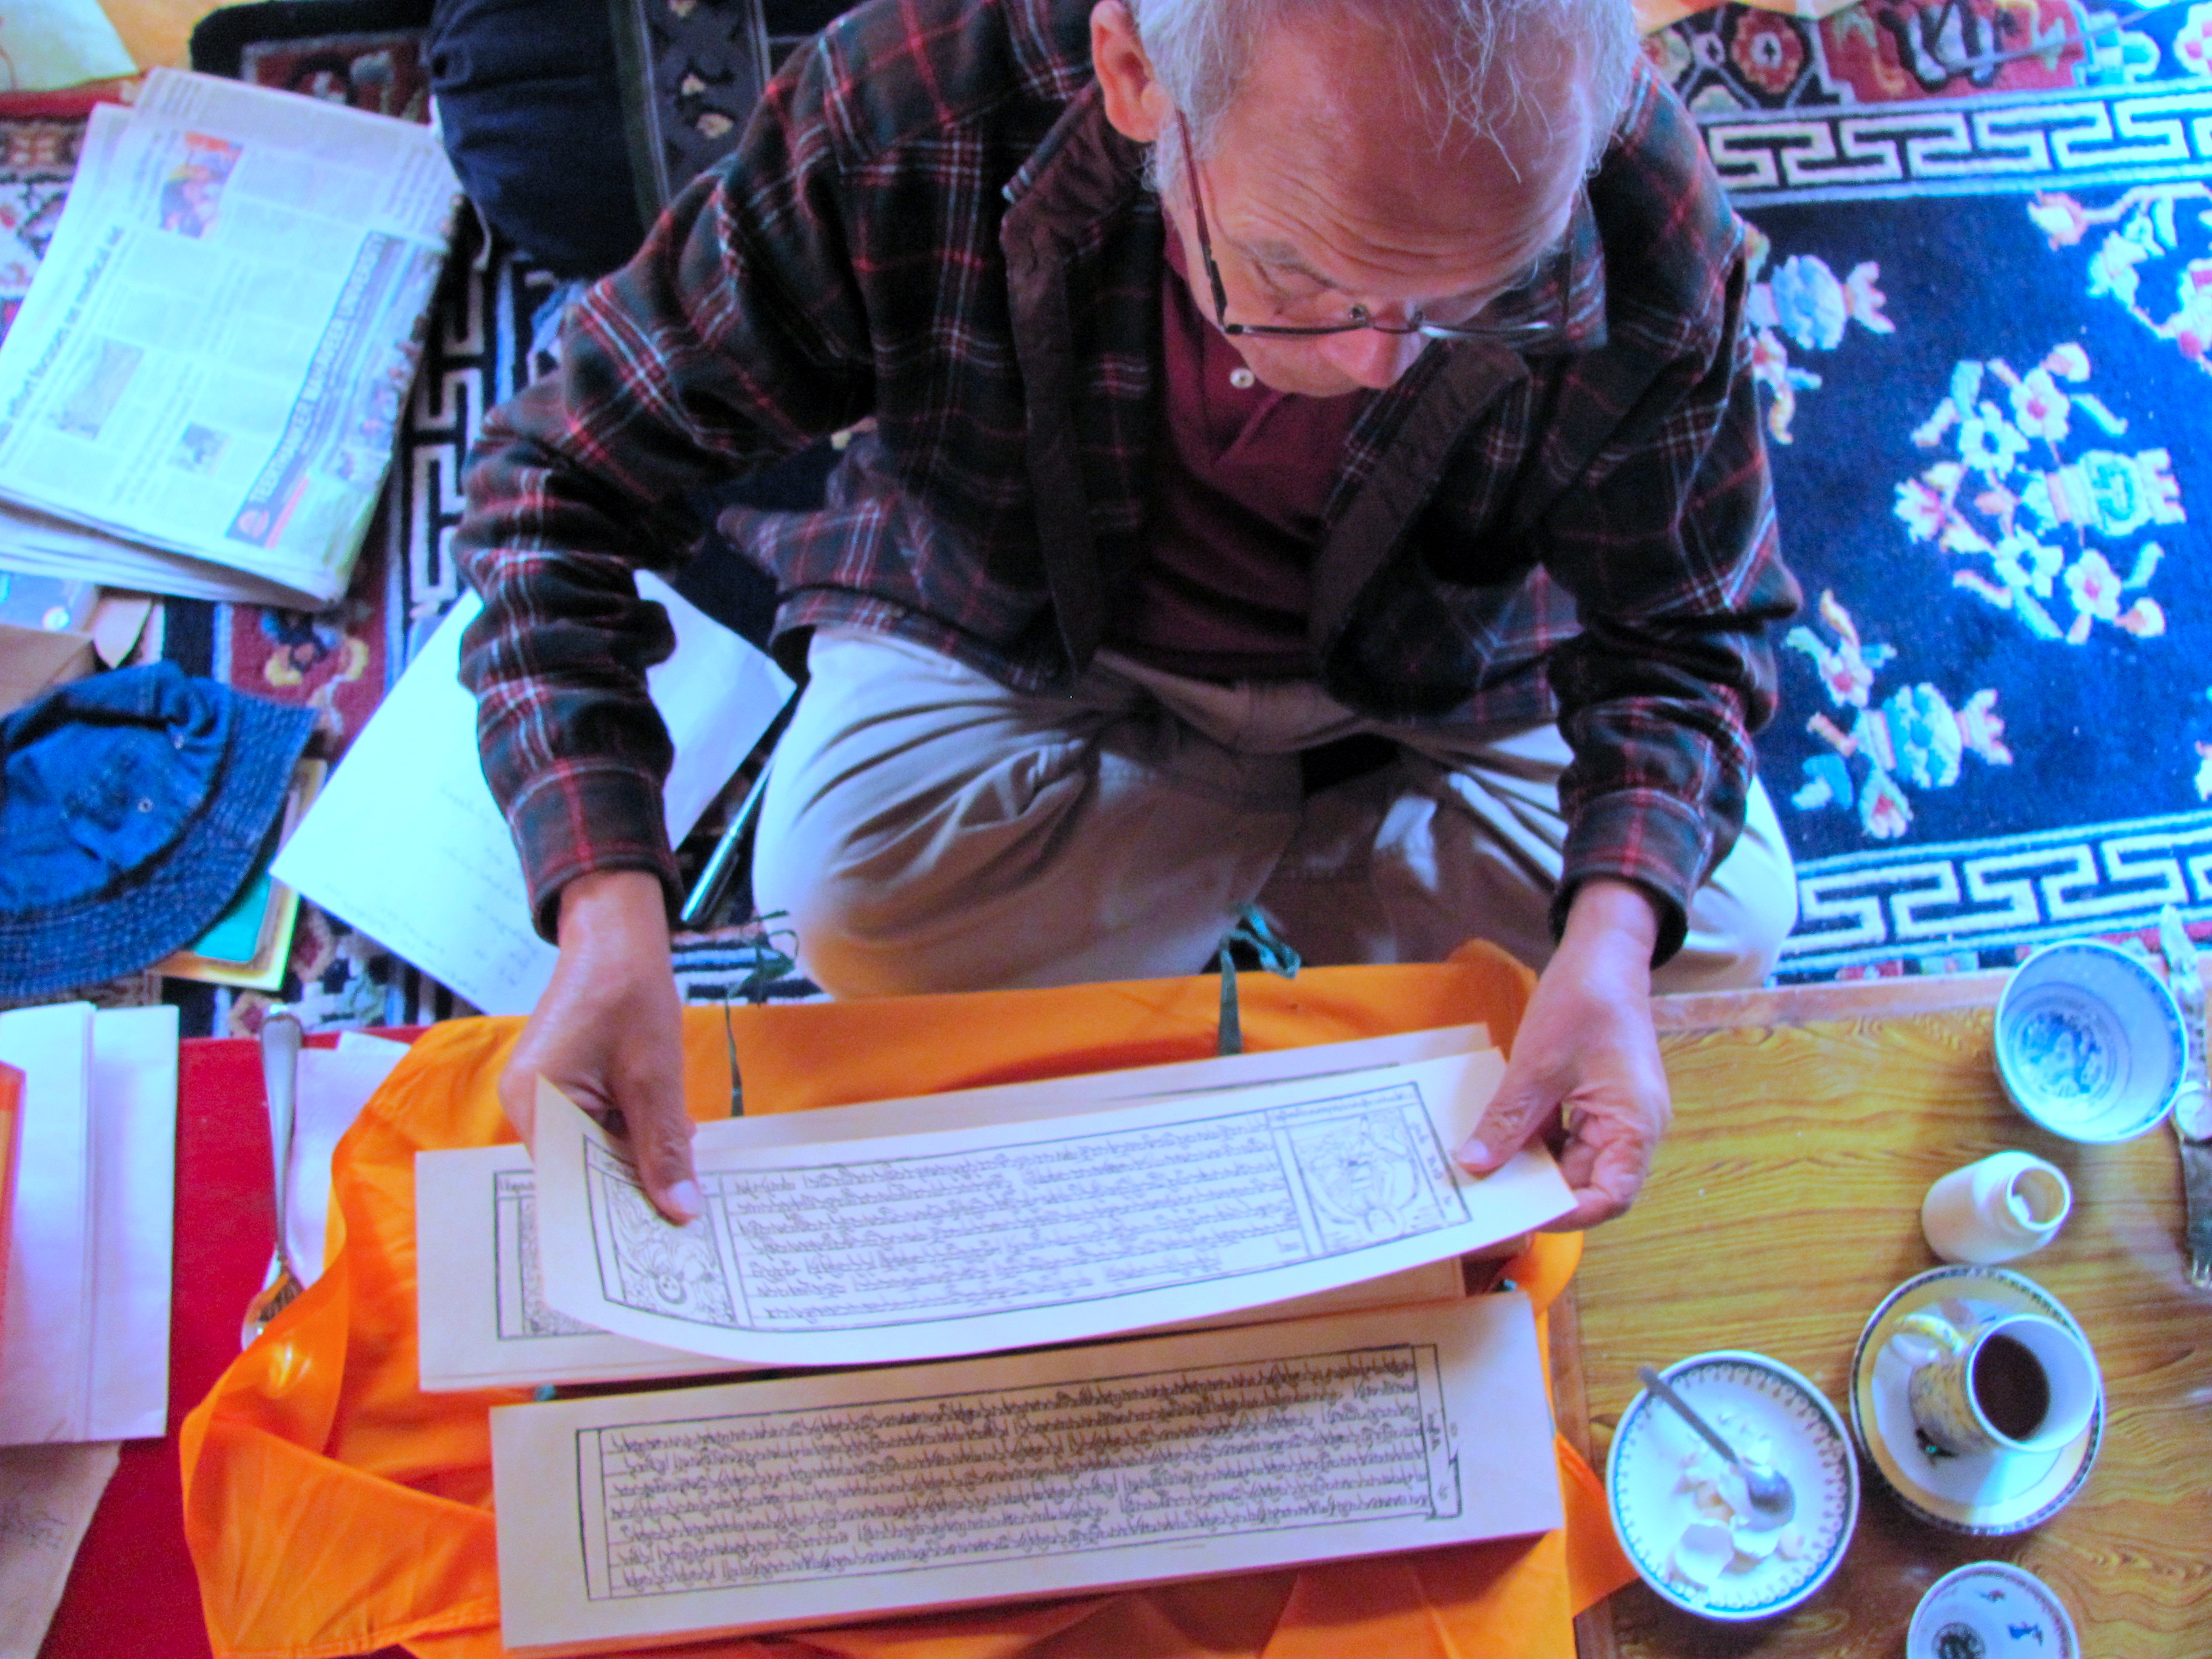 Geshe Jamspal reads the Prajnaparamita in Ladakh, India, 2010.